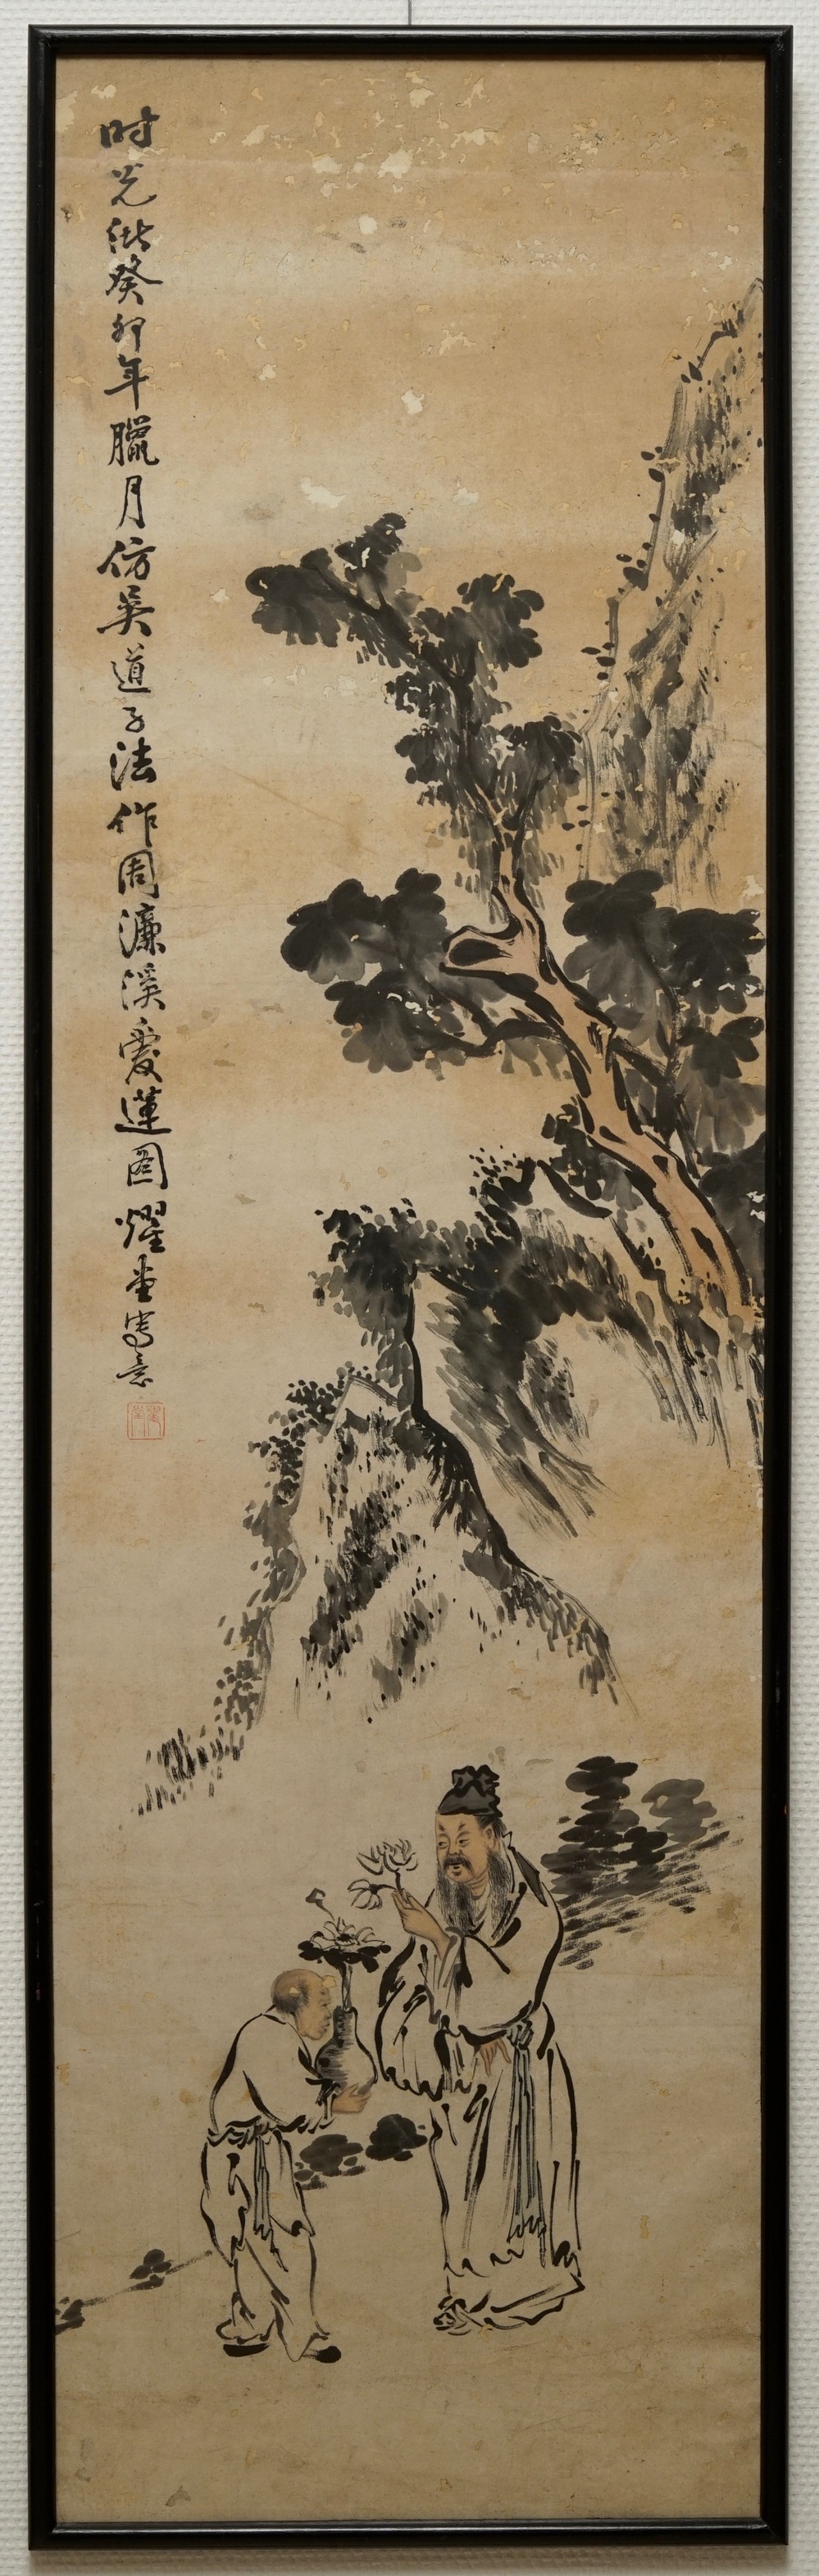 Yao Tang: De filosoof Zhou Lian Xi, inkt en kleur op papier, gedat. 1843